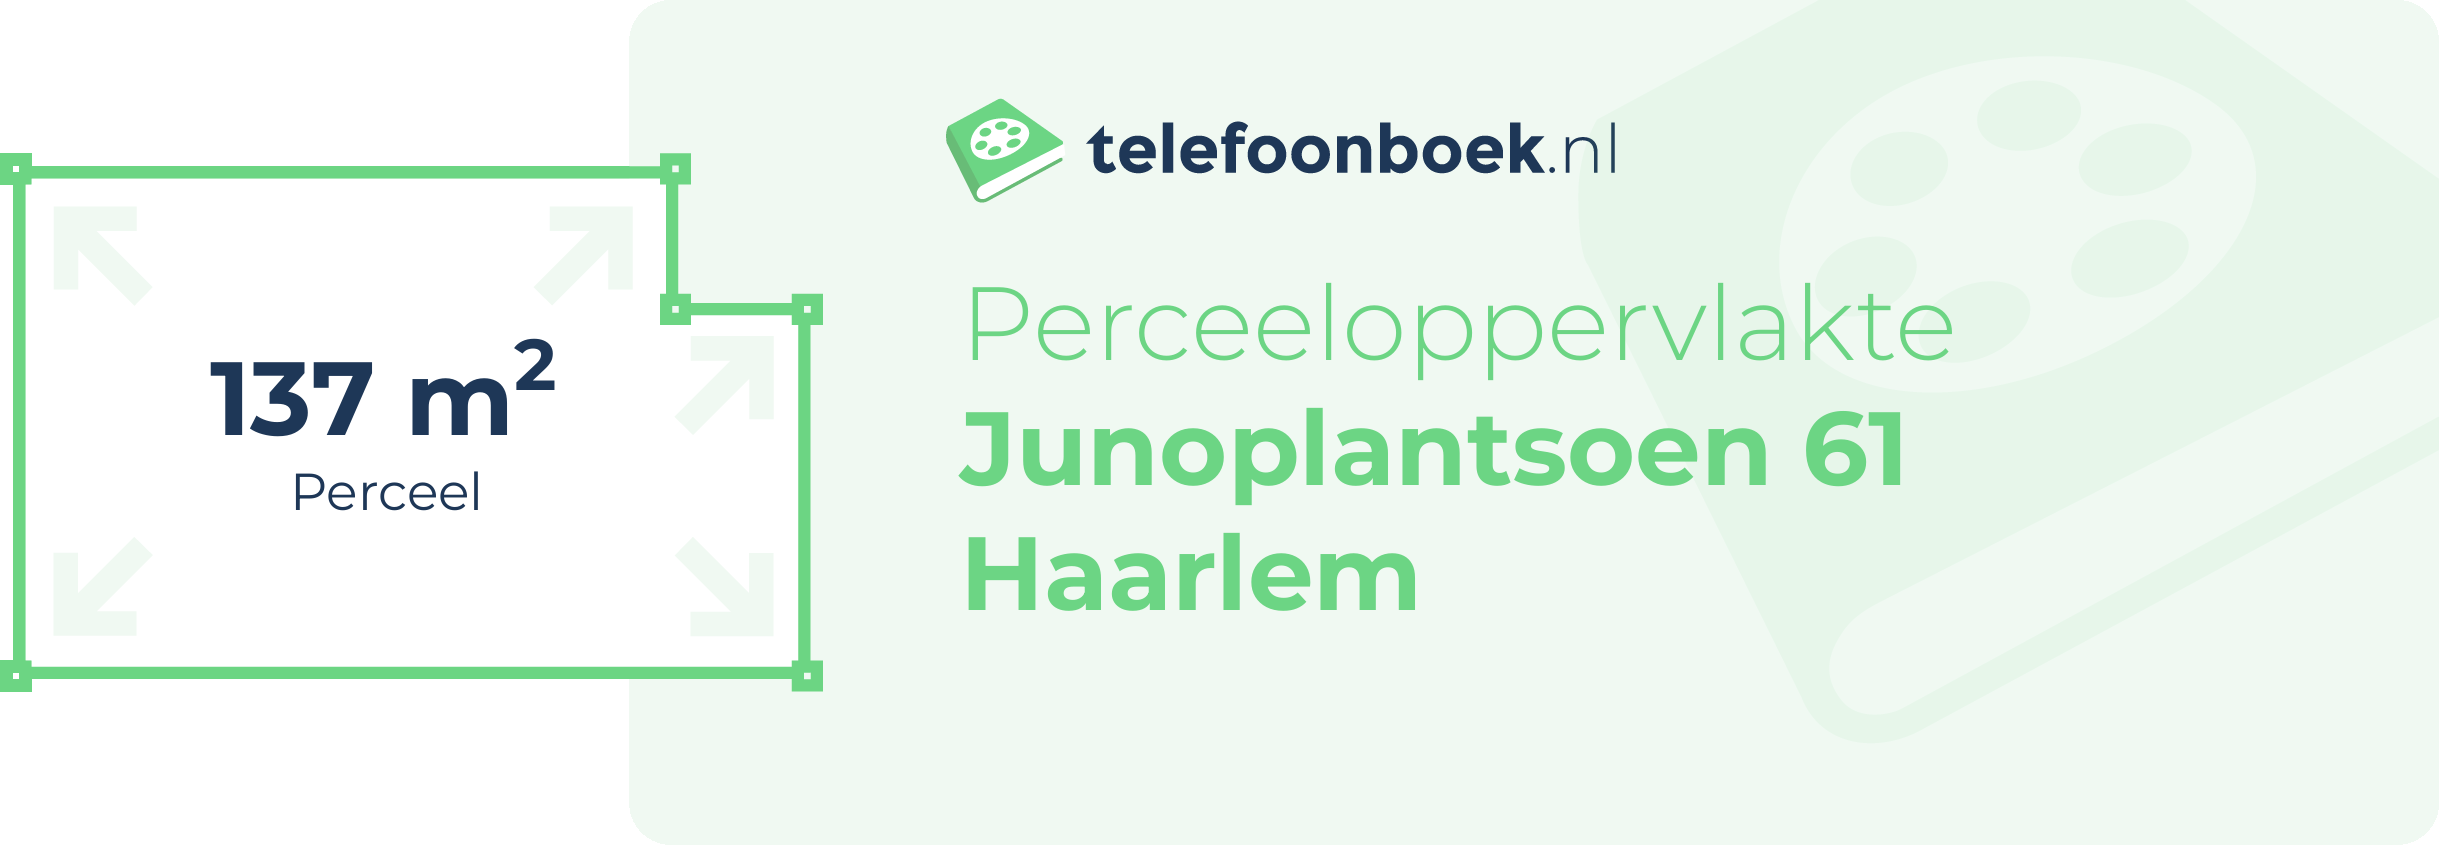 Perceeloppervlakte Junoplantsoen 61 Haarlem